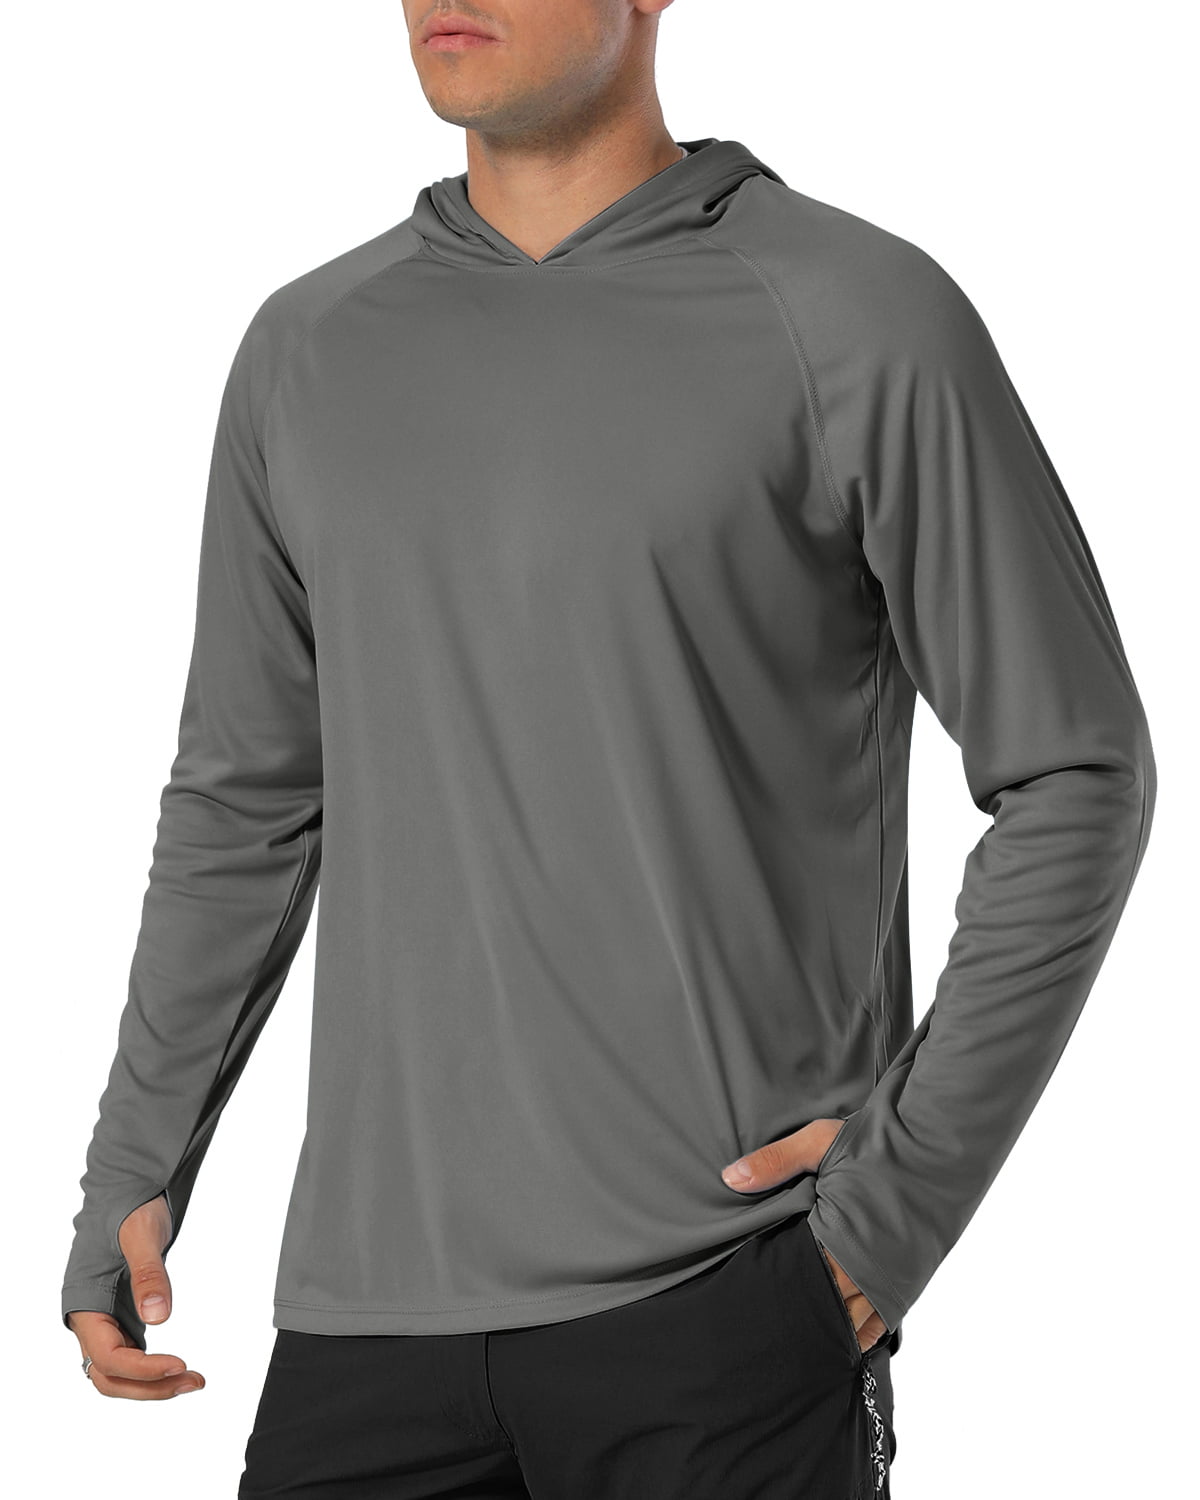 WSPLYSPJY Mens Oblique Zipper Sport Long Sleeve Hoodies Sweatshirts